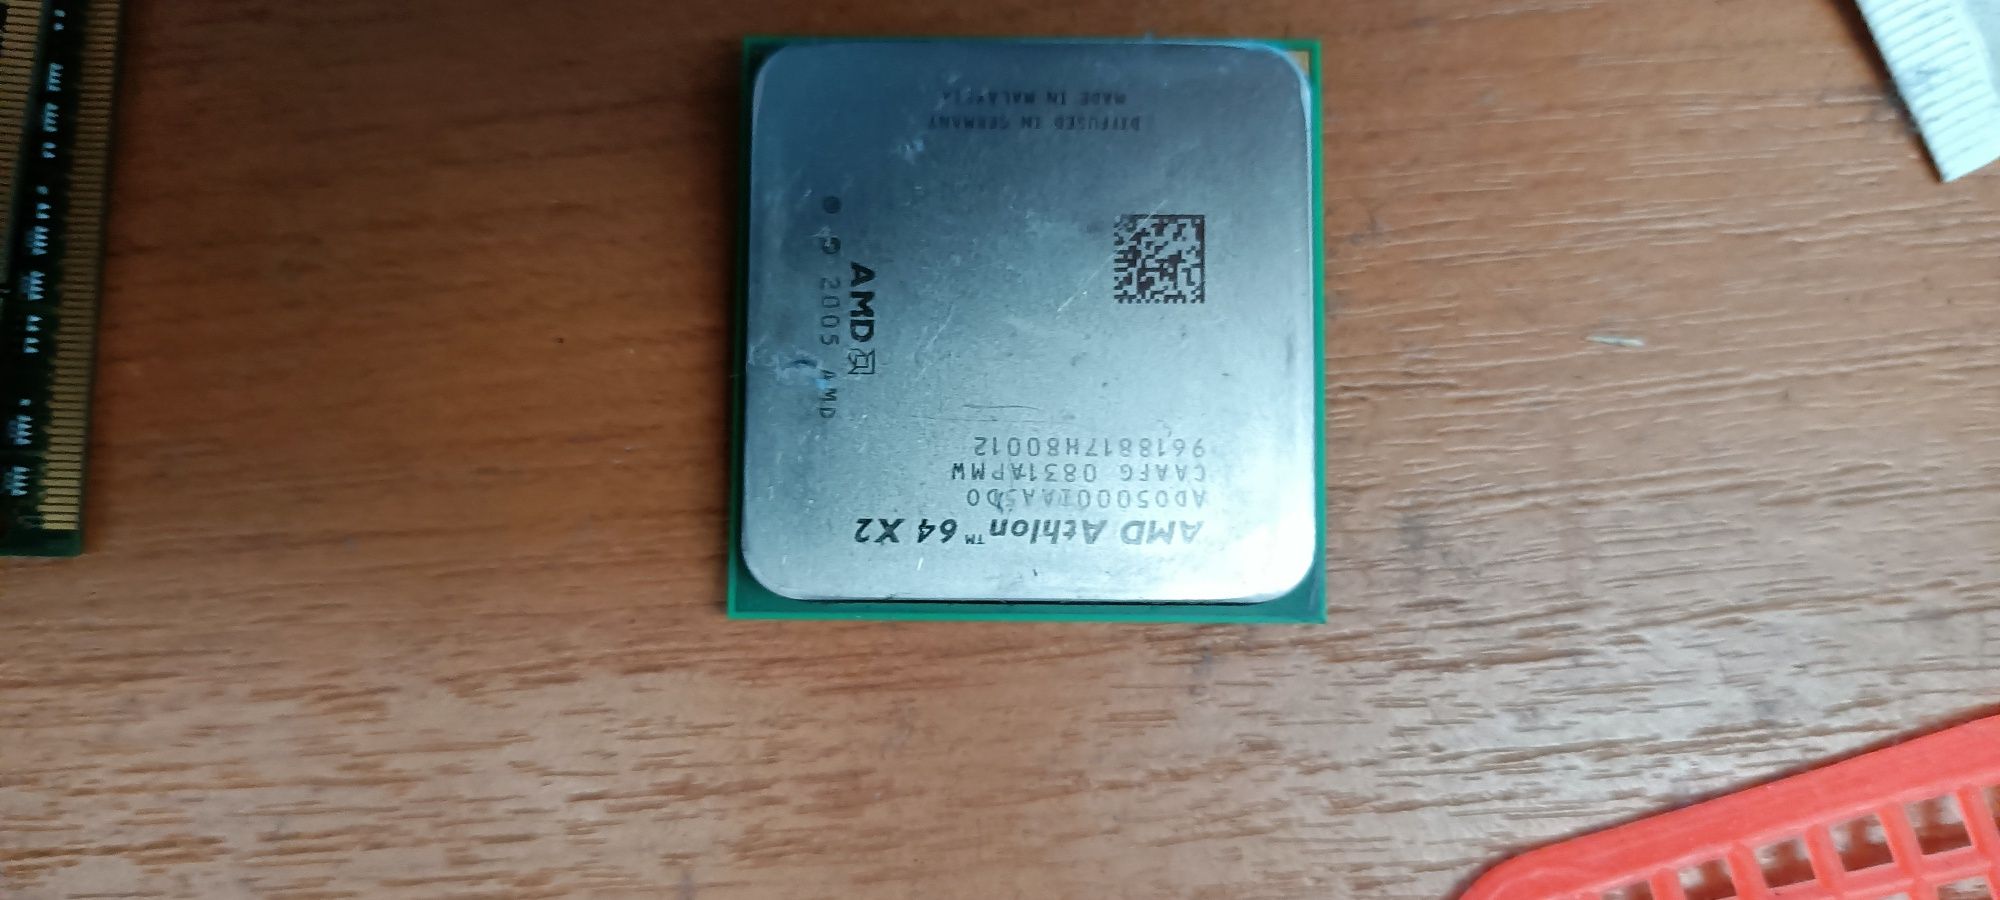 Procesor AMD Athlon 64 x2